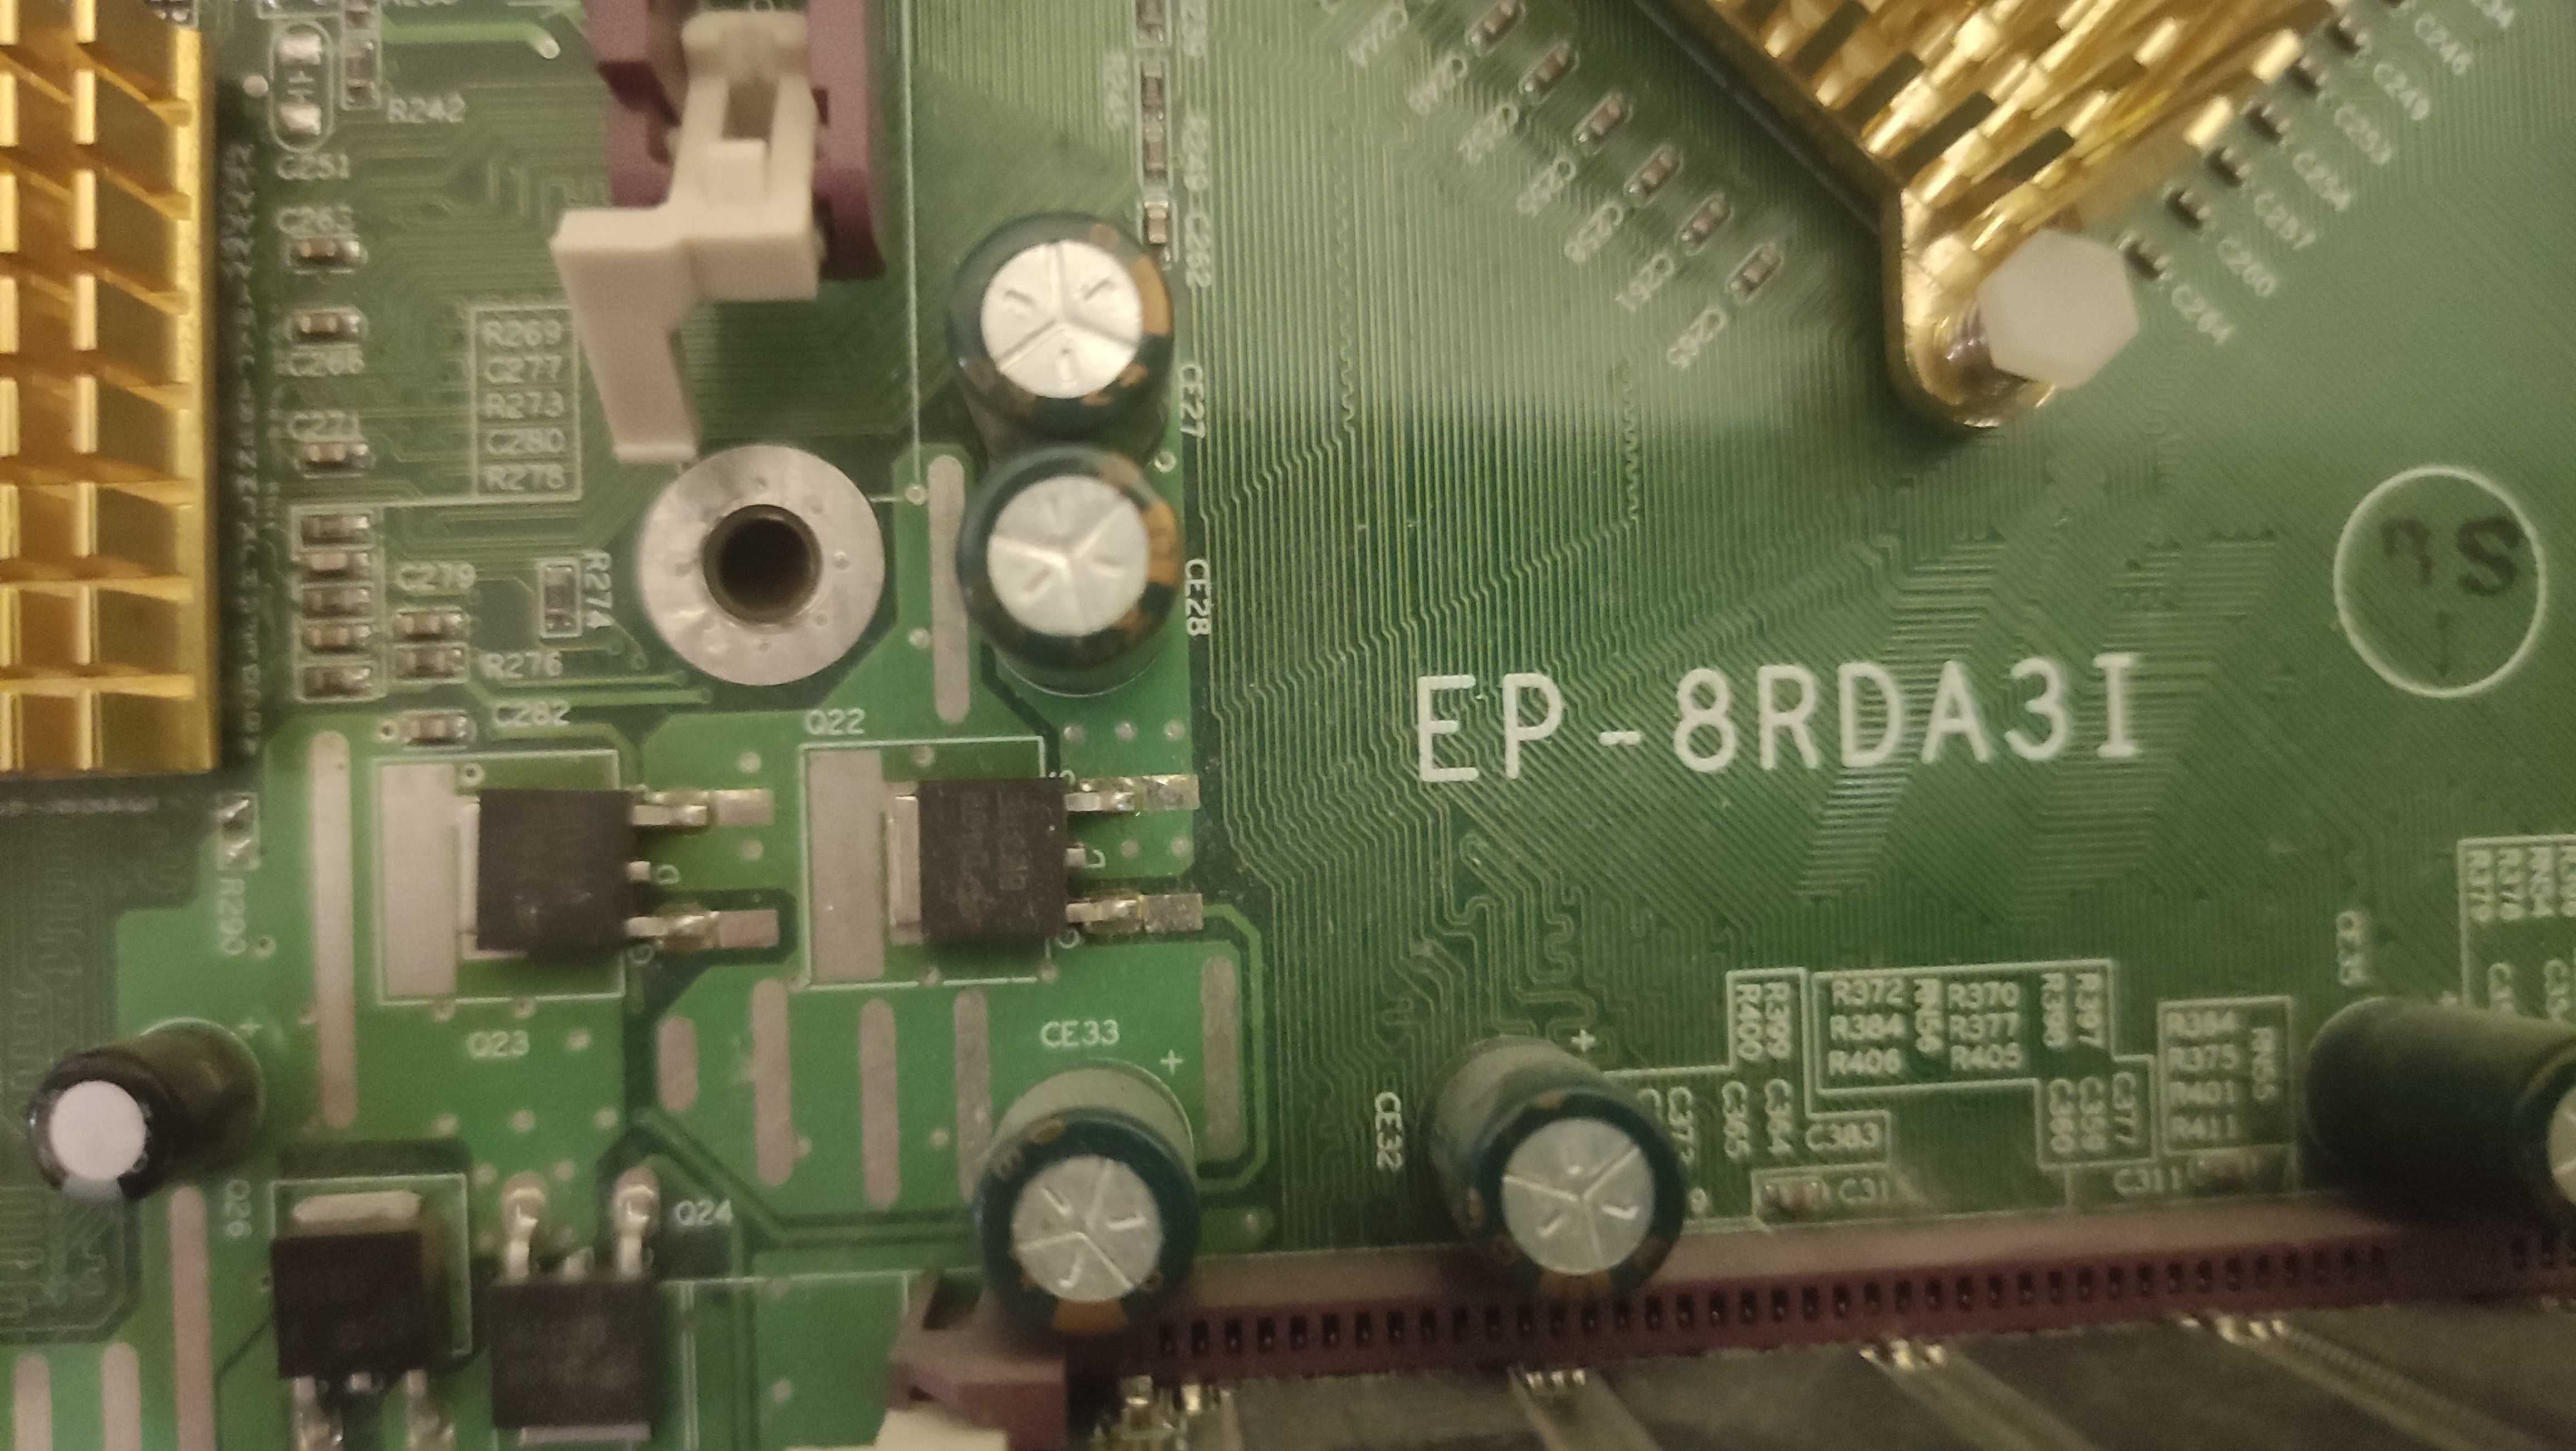 Материнская плата + процессор (EP-8RDA3I) AMD Atlon